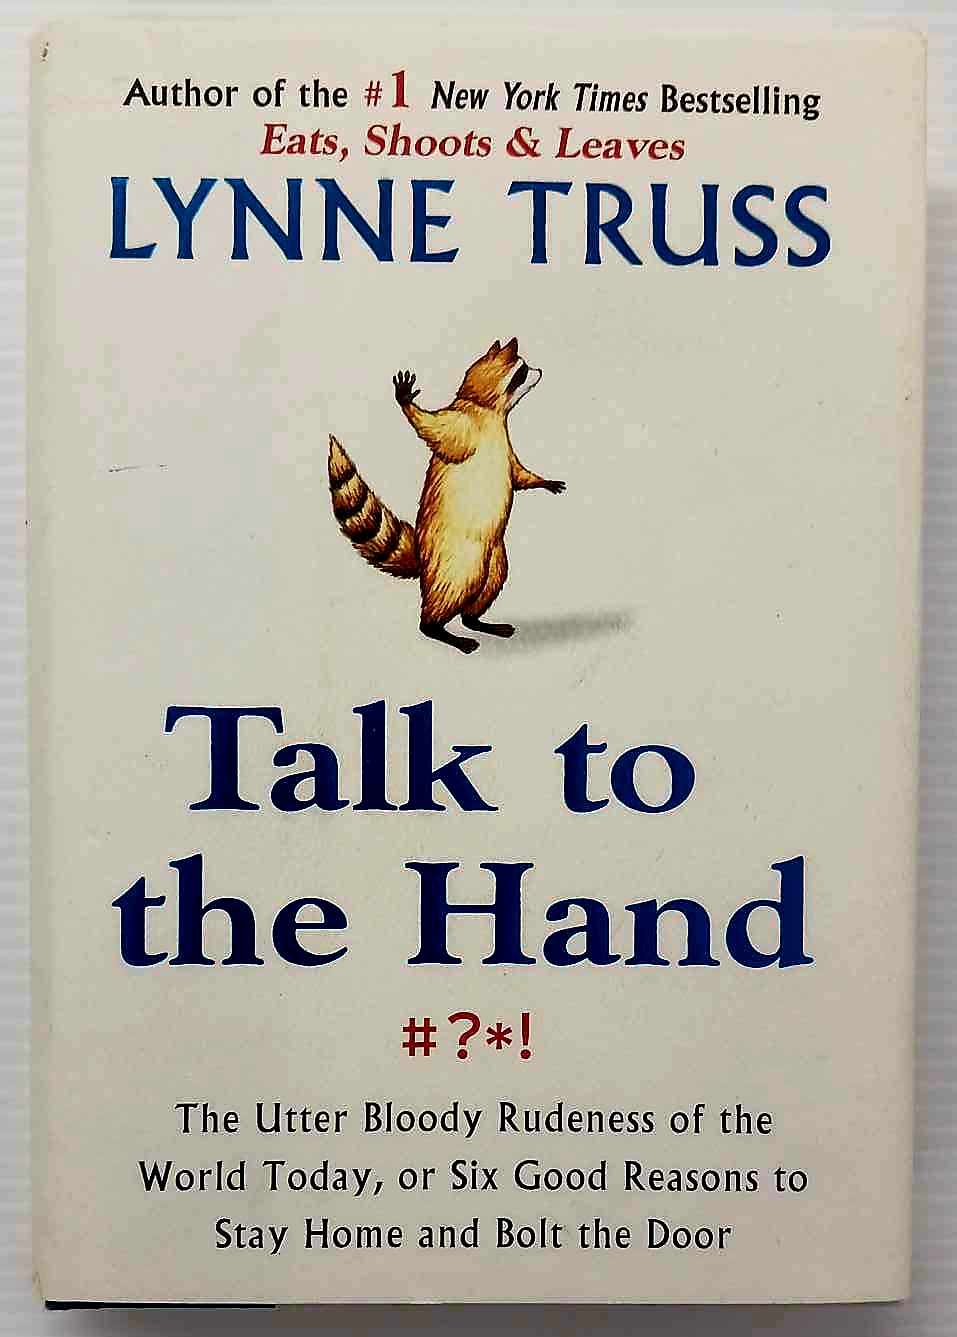 TALK TO THE HAND - Lynn Truss